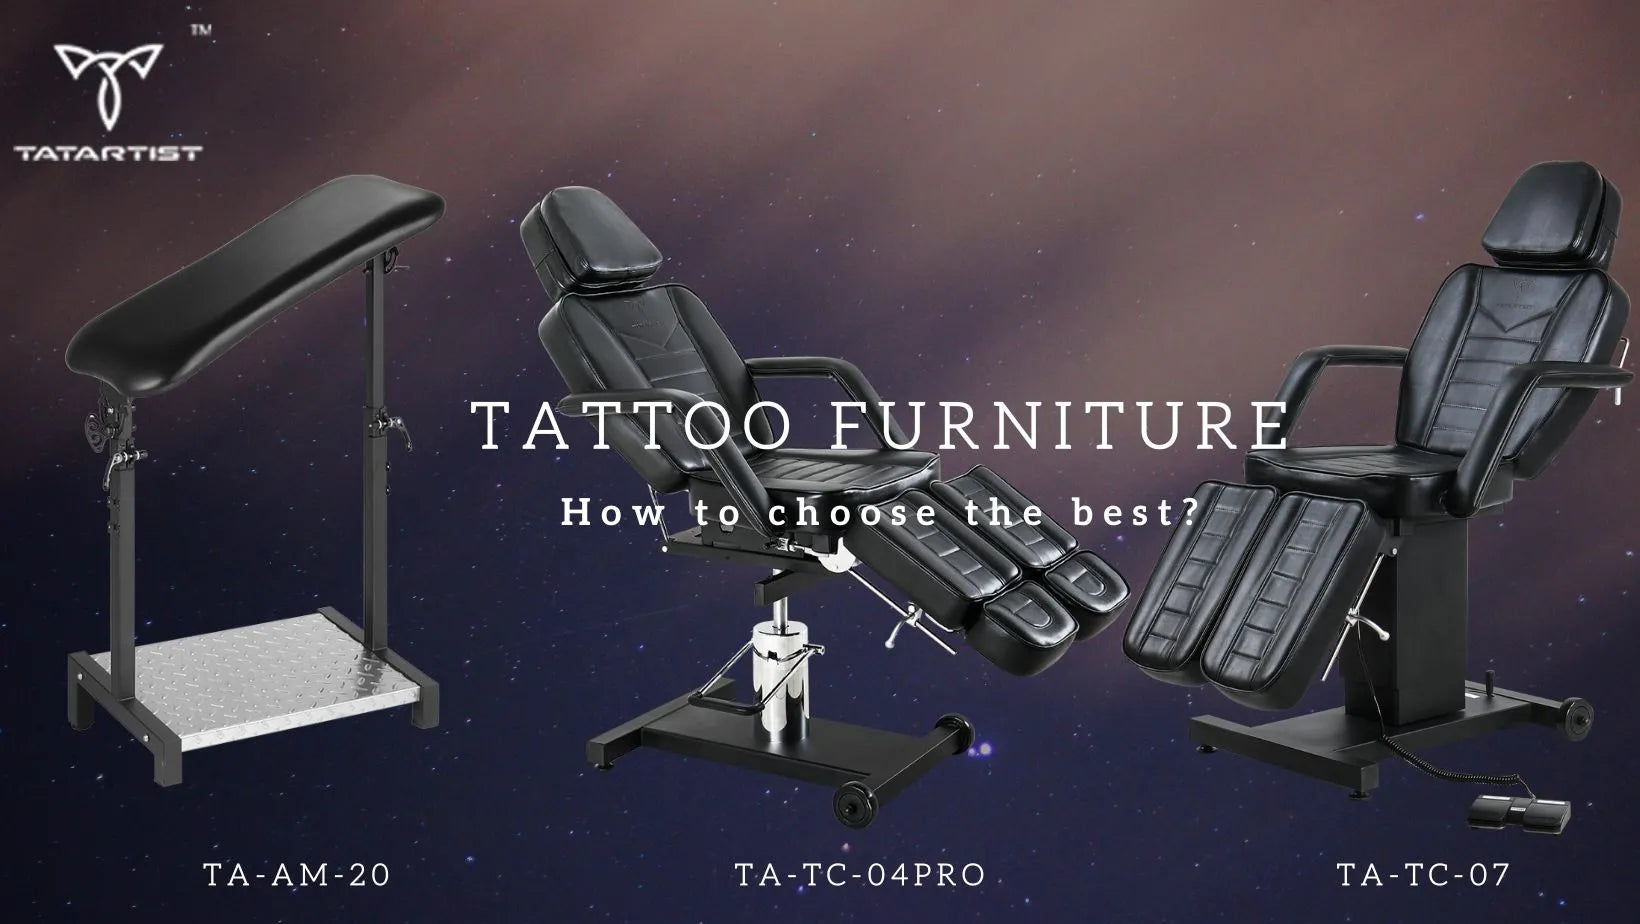 How do tattoo artists choose tattoo furniture?